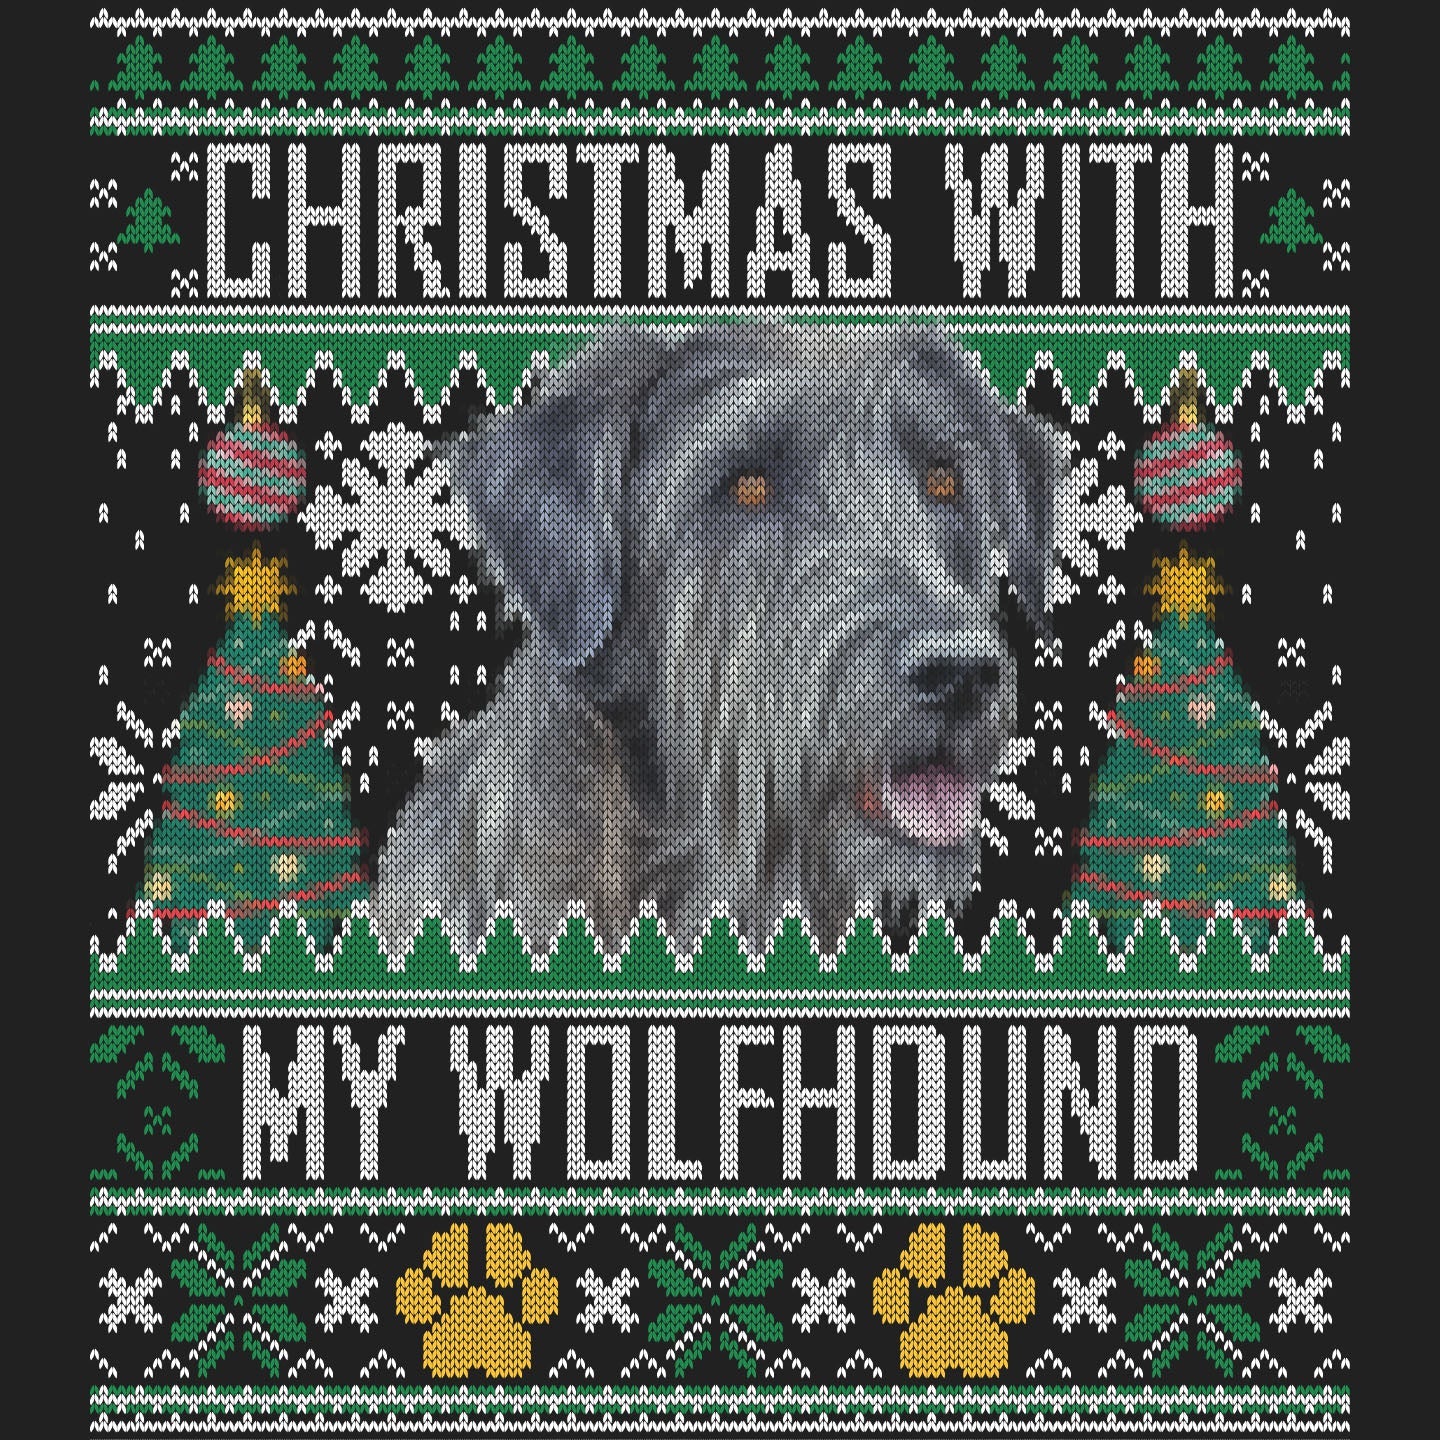 Ugly Sweater Christmas with My Irish Wolfhound - Women's V-Neck Long Sleeve T-Shirt